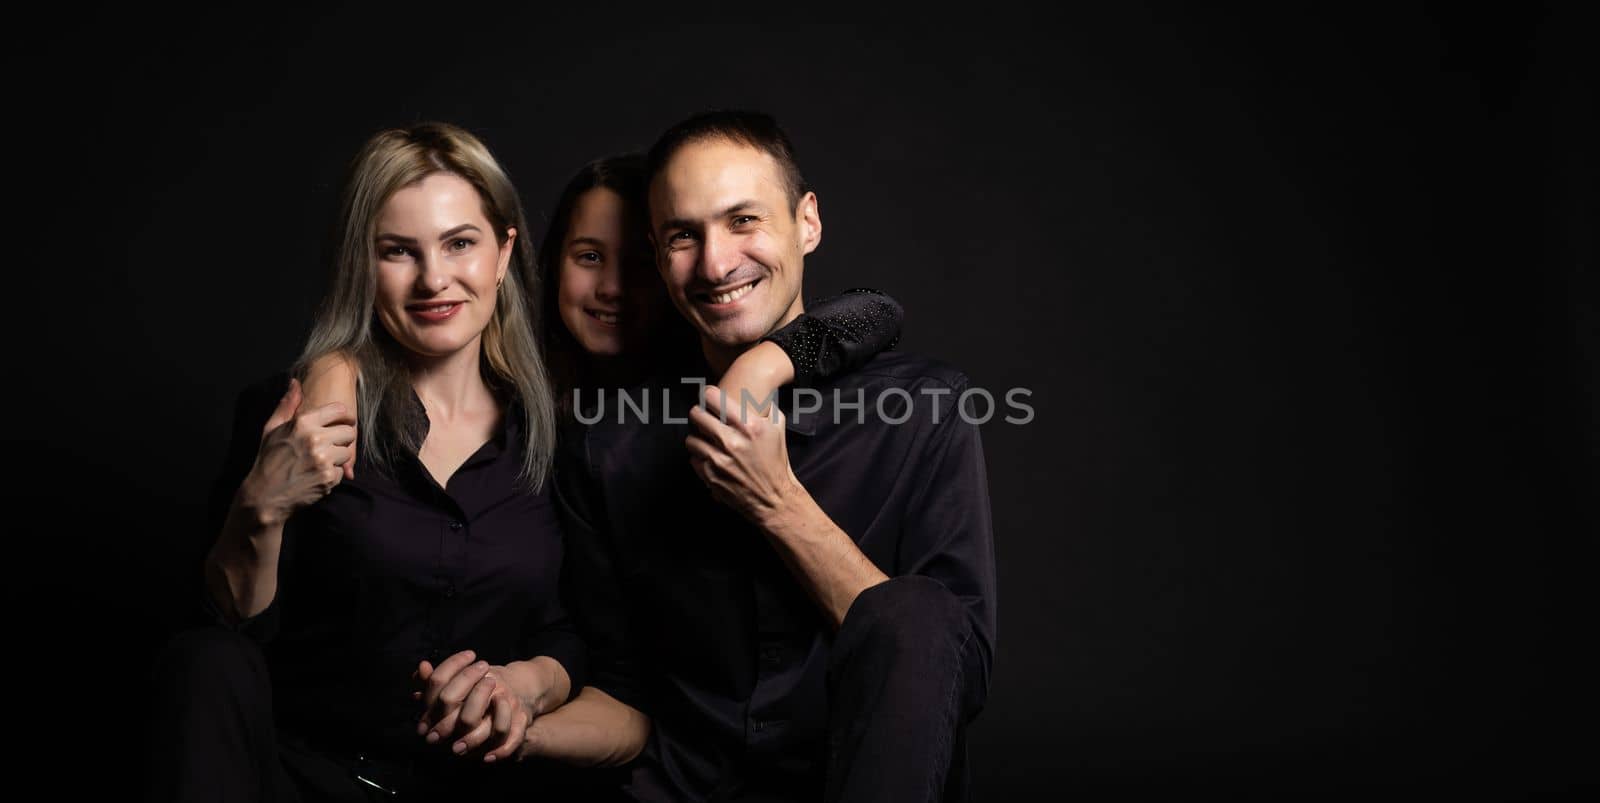 Family portrait on black background by Andelov13